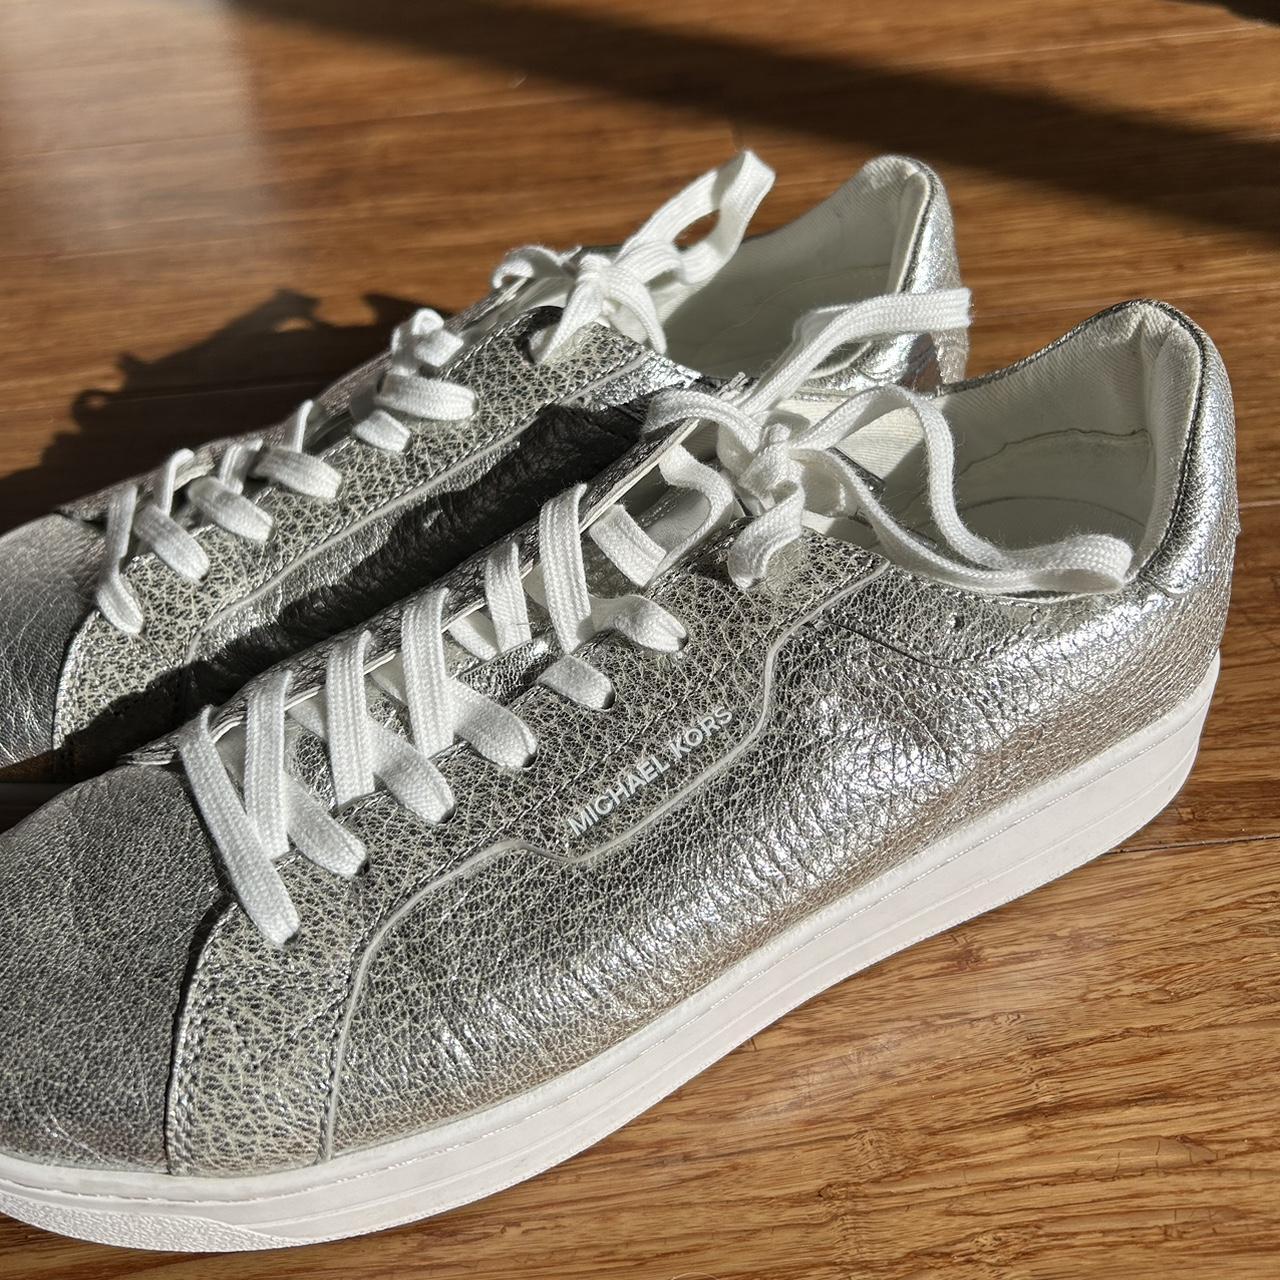 Michael Kors Women's Wilma Trainer Sneakers Shoes Silver Multi | eBay